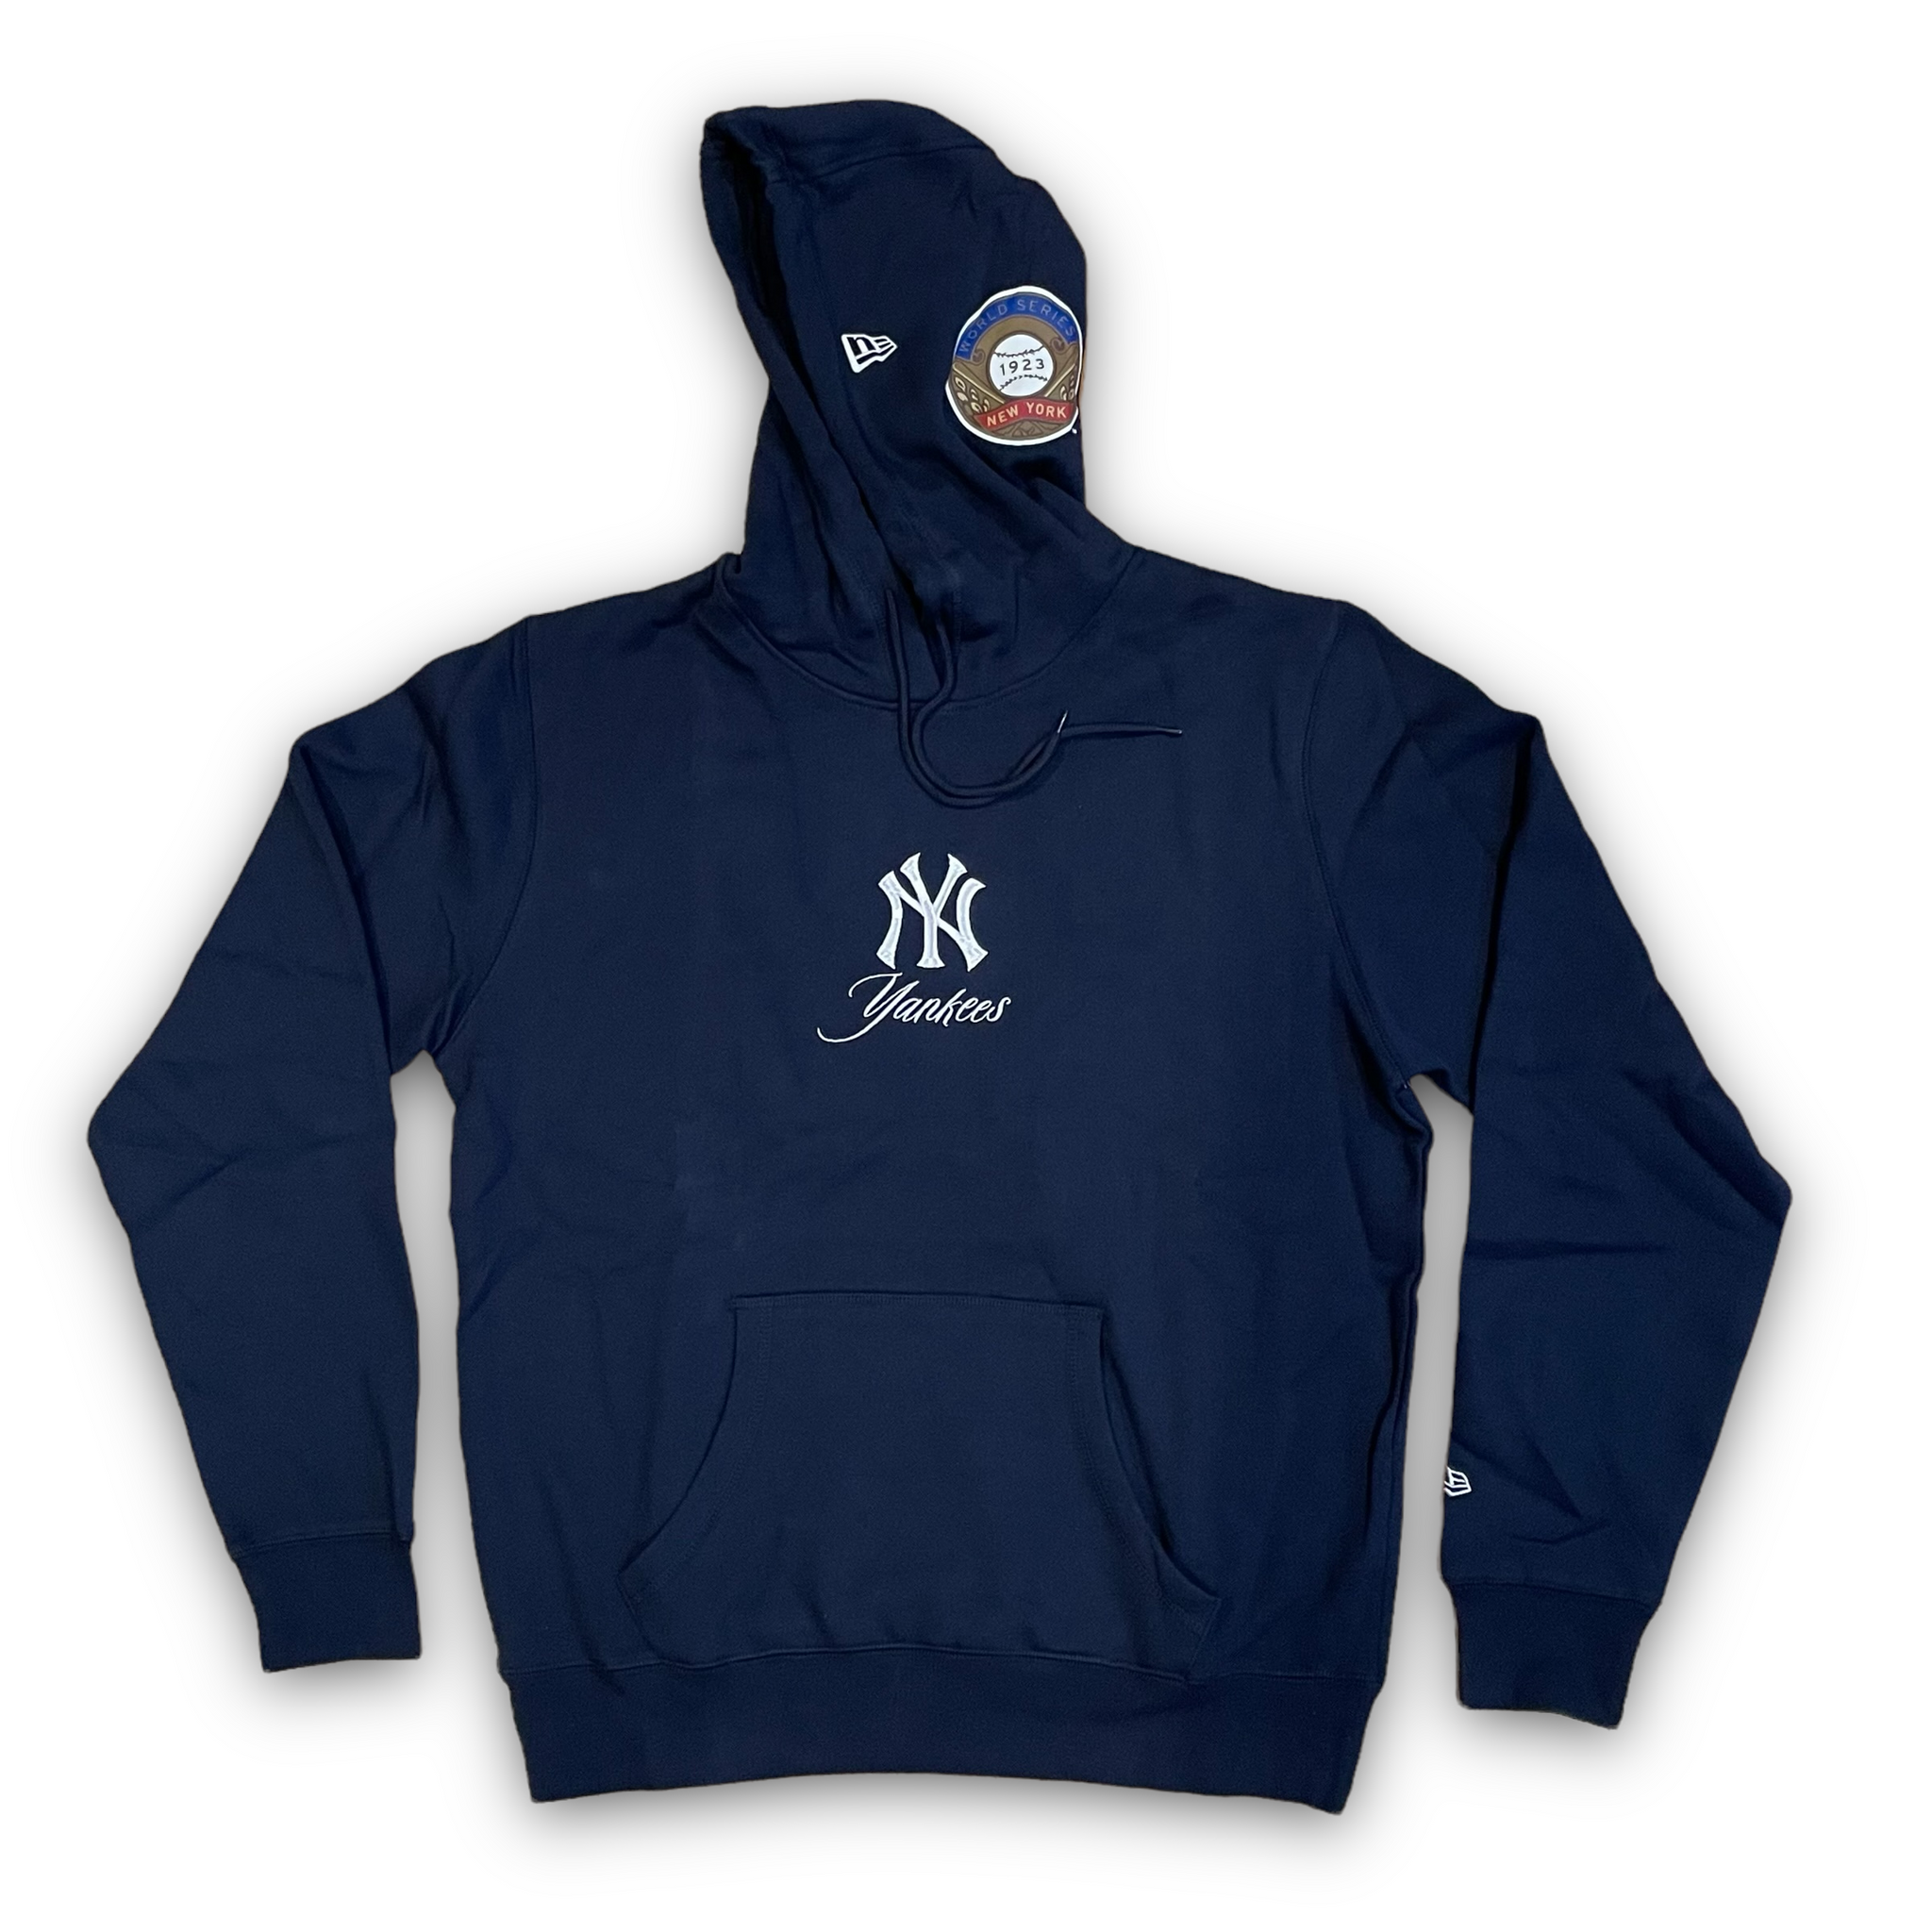 Amazoncom  47 Brand Imprint Hoody  MLB New York Yankees Small Navy   Sports  Outdoors